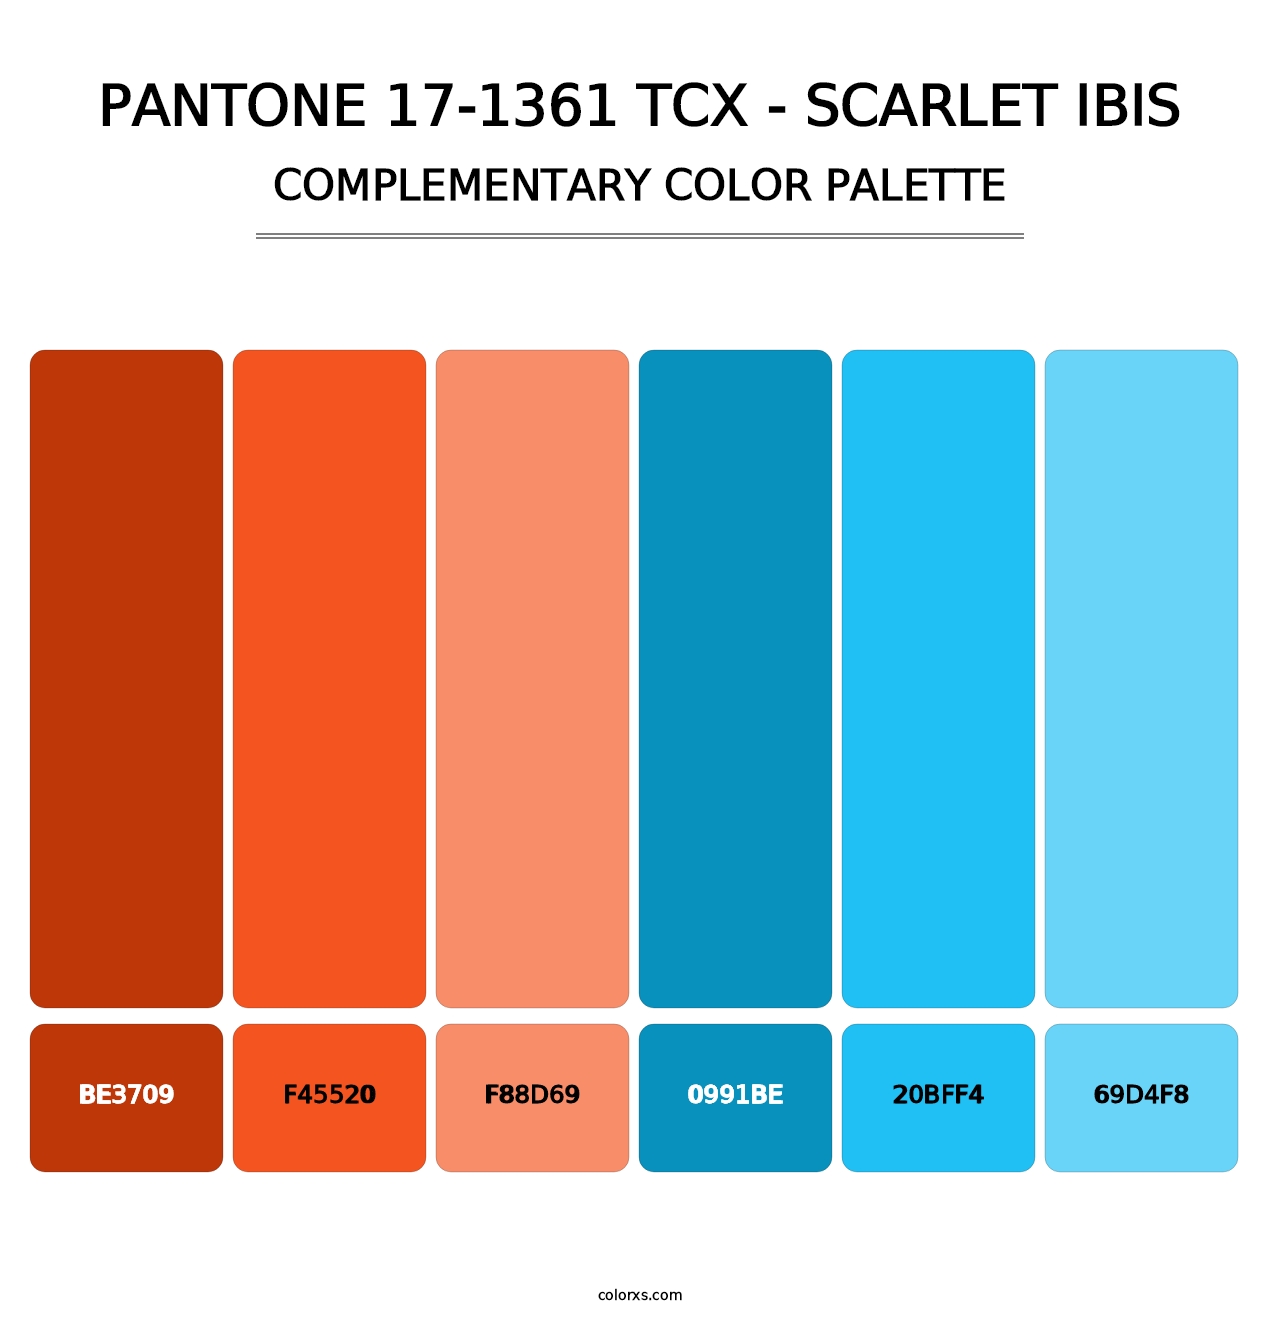 PANTONE 17-1361 TCX - Scarlet Ibis - Complementary Color Palette